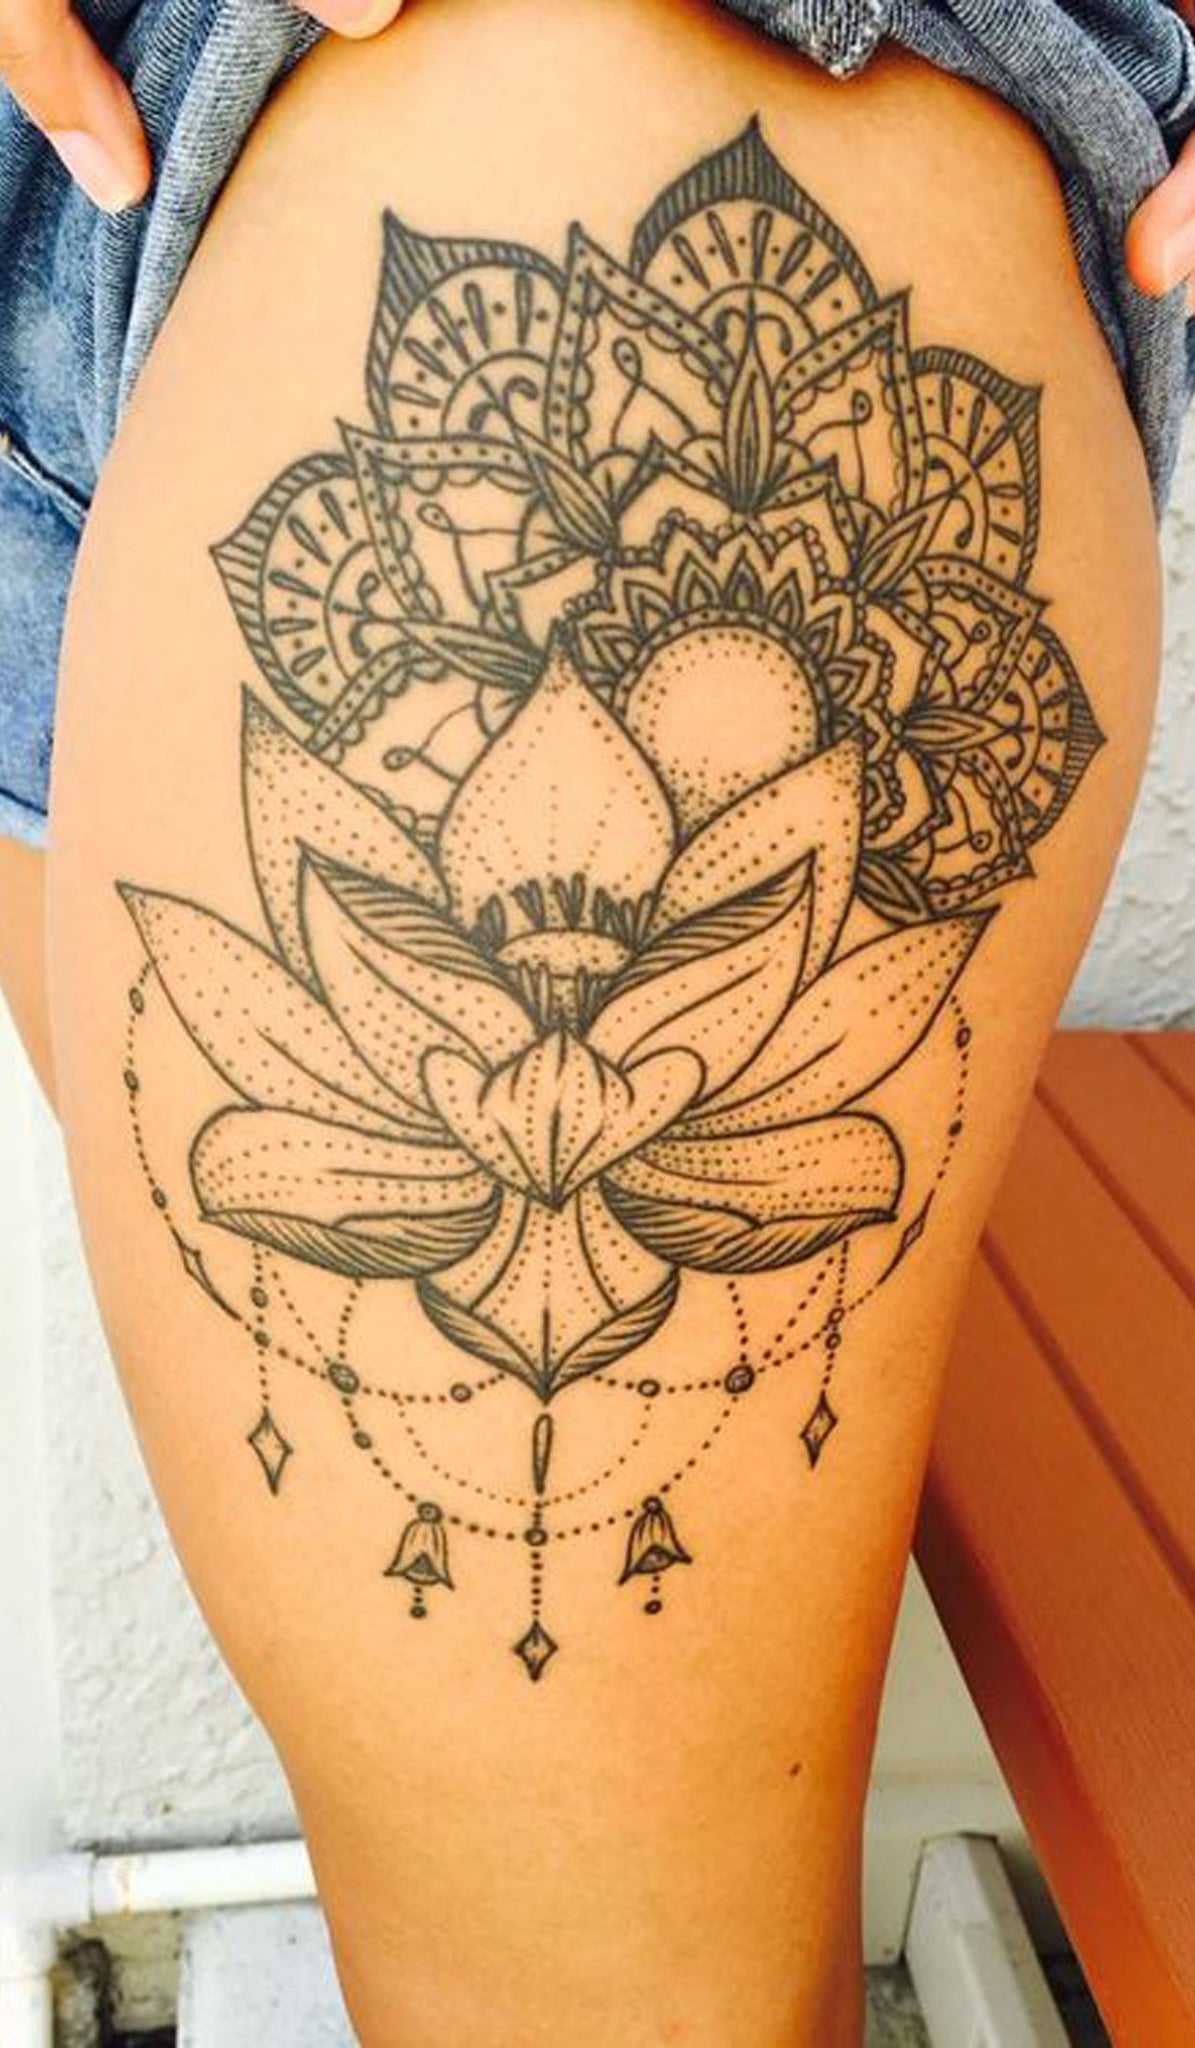 Lotus Thigh Tattoo Ideas for Women - Flower Chandelier Mandala Leg Tat -  tatuaje de muslo de loto dieas para mujeres - www.MyBodiArt.com #tattoo